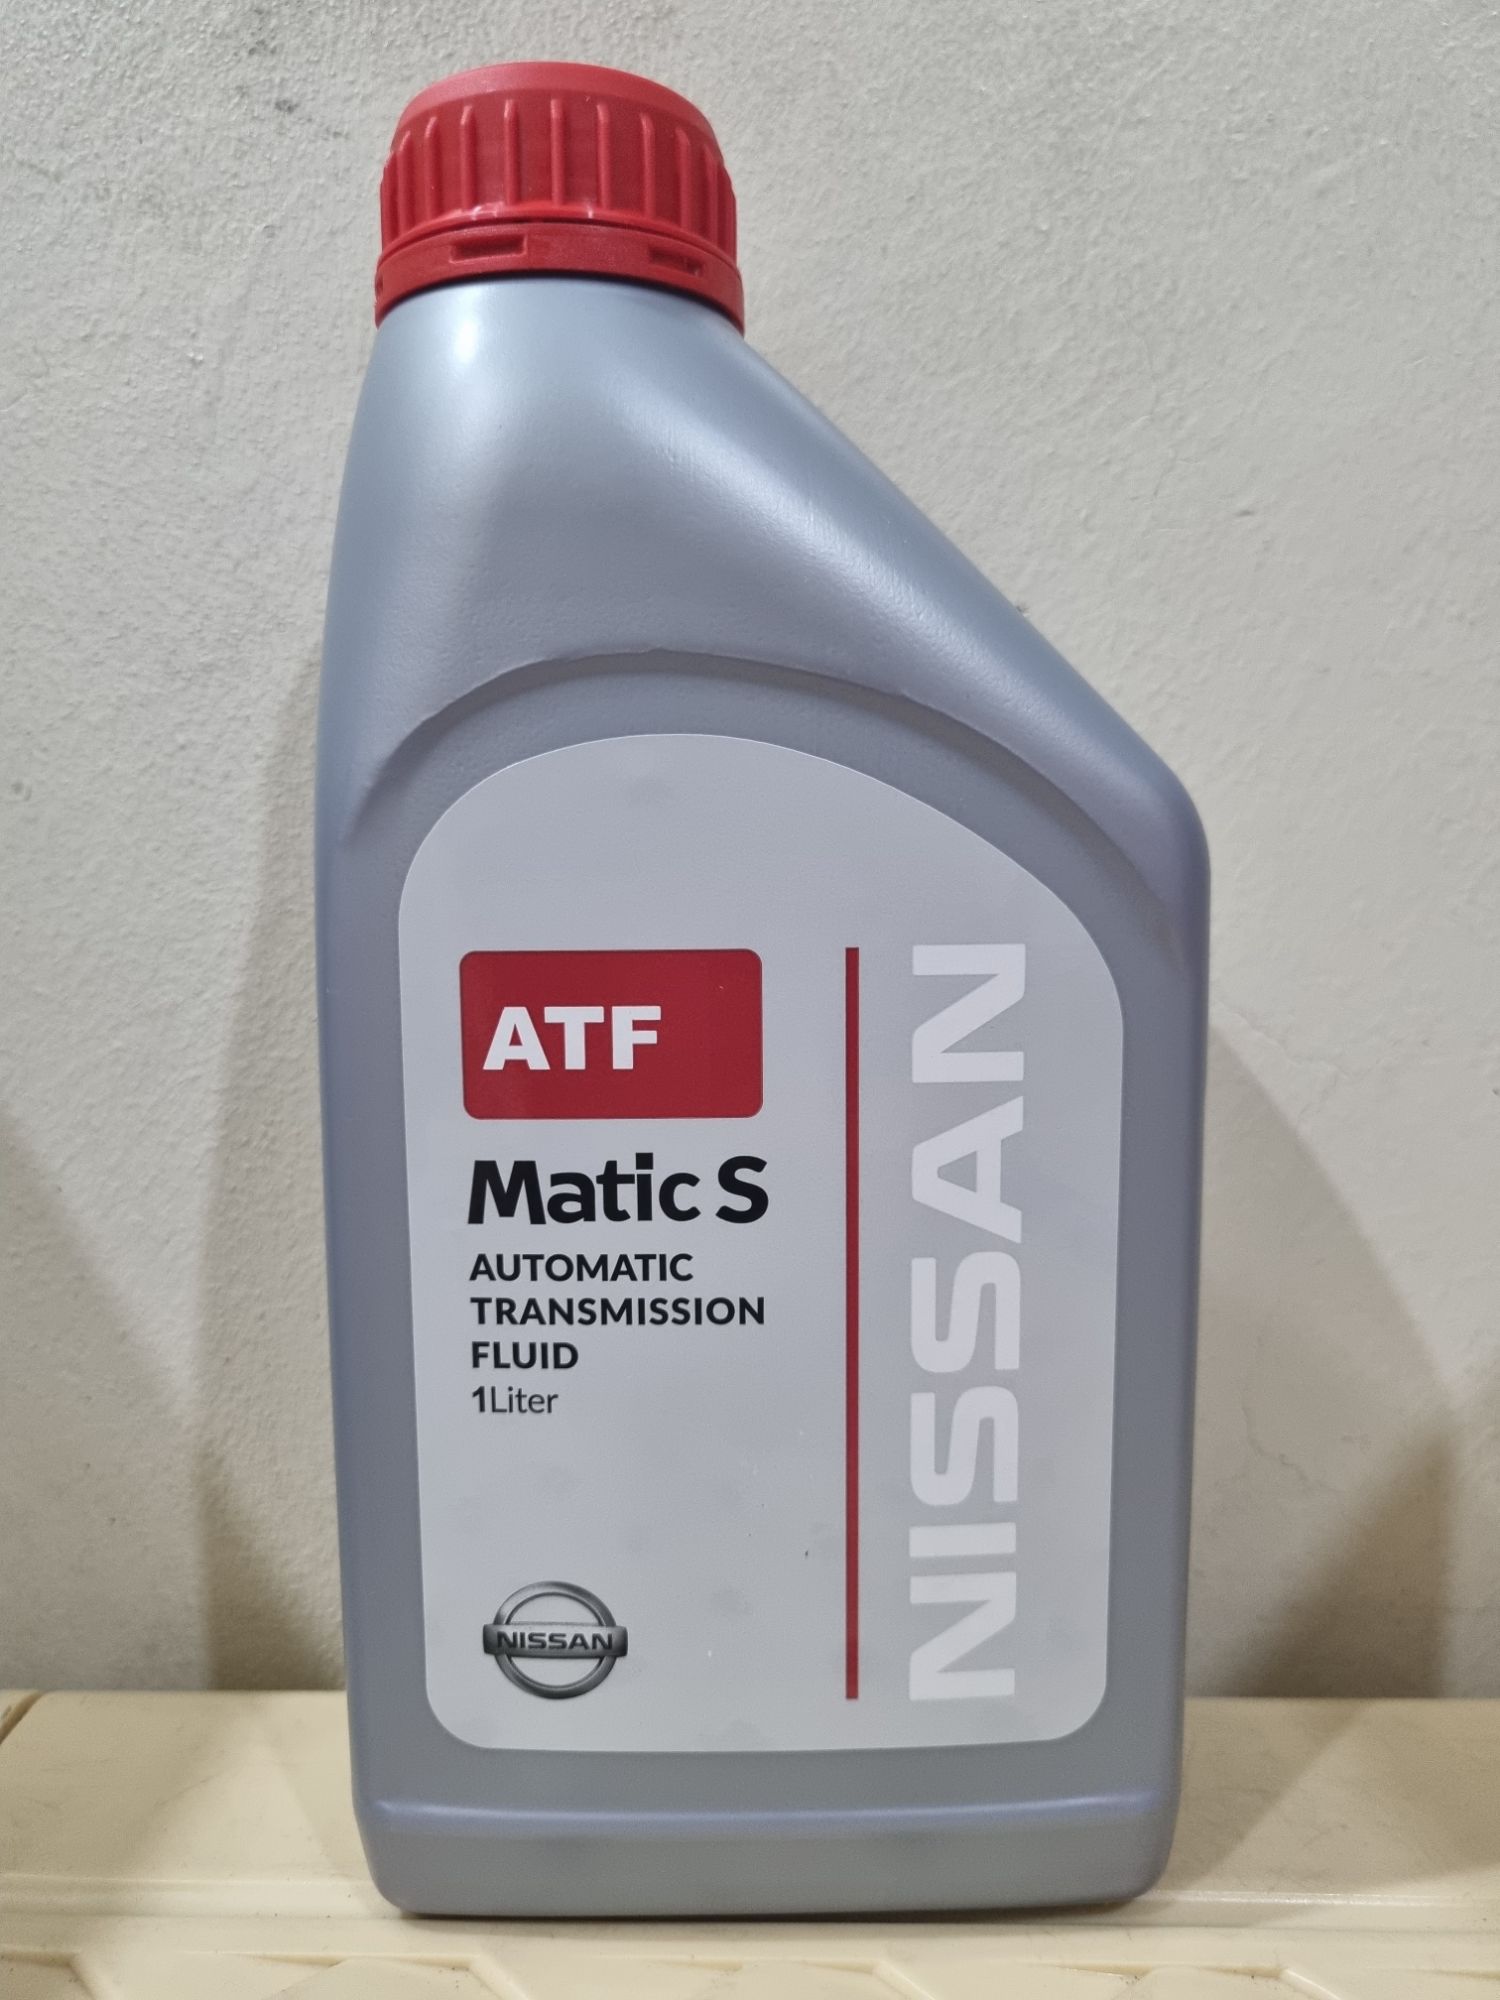 Atf matic j. Nissan ATF matic-s. Nissan Automatic transmission Fluid matic-s. Ниссан матик j. АКПП Nissan matic d4 масло.